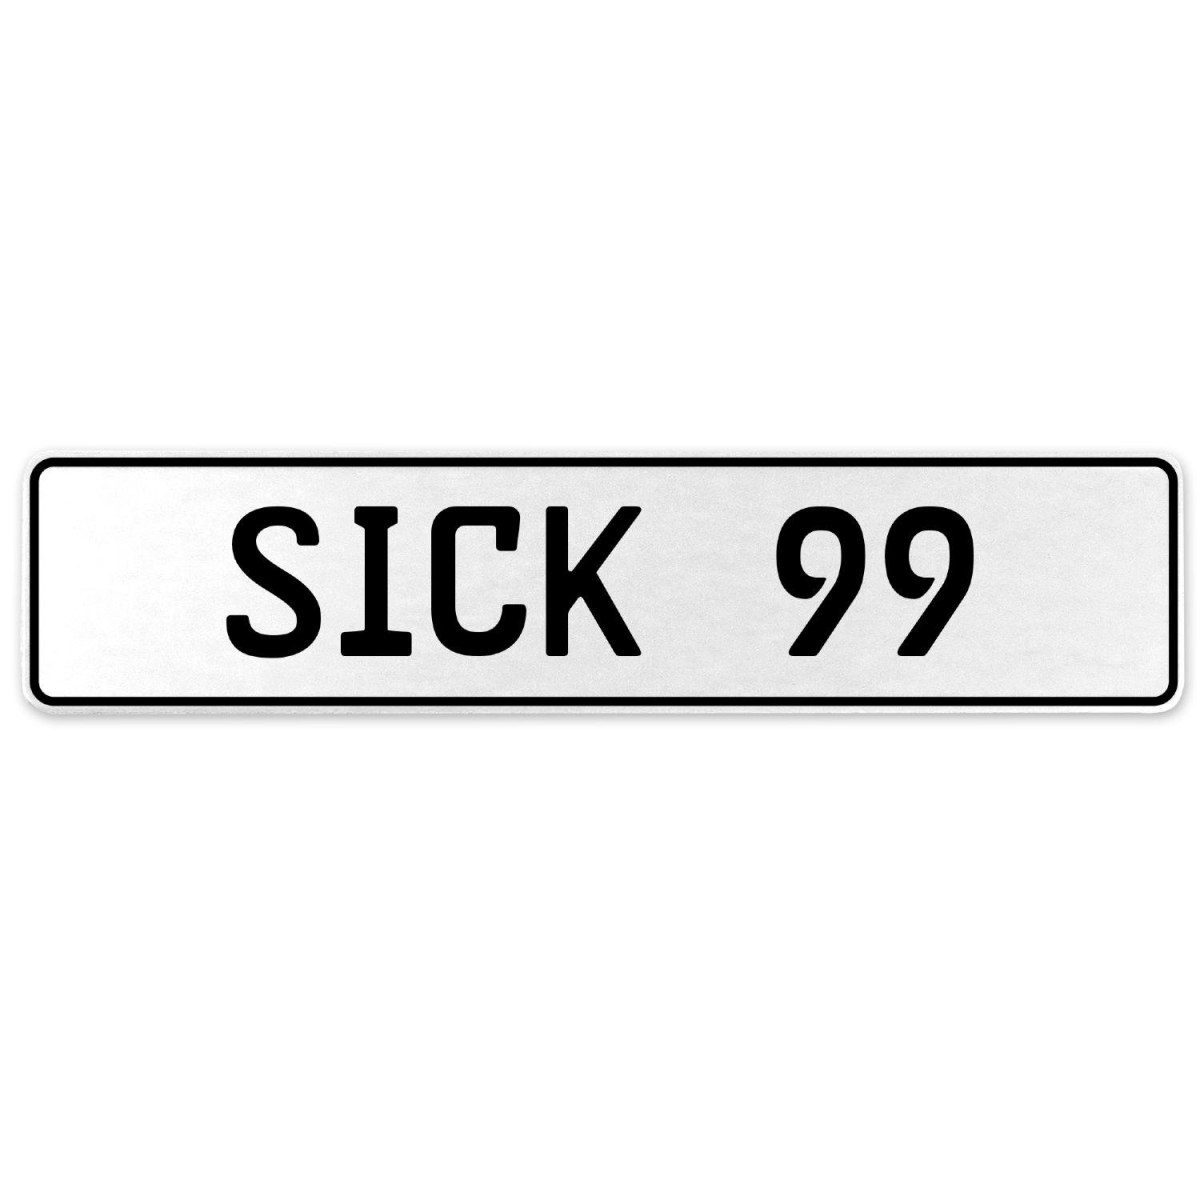 554399 Sick 99 - White Aluminum Street Sign Mancave Euro Plate Name Door Sign Wall